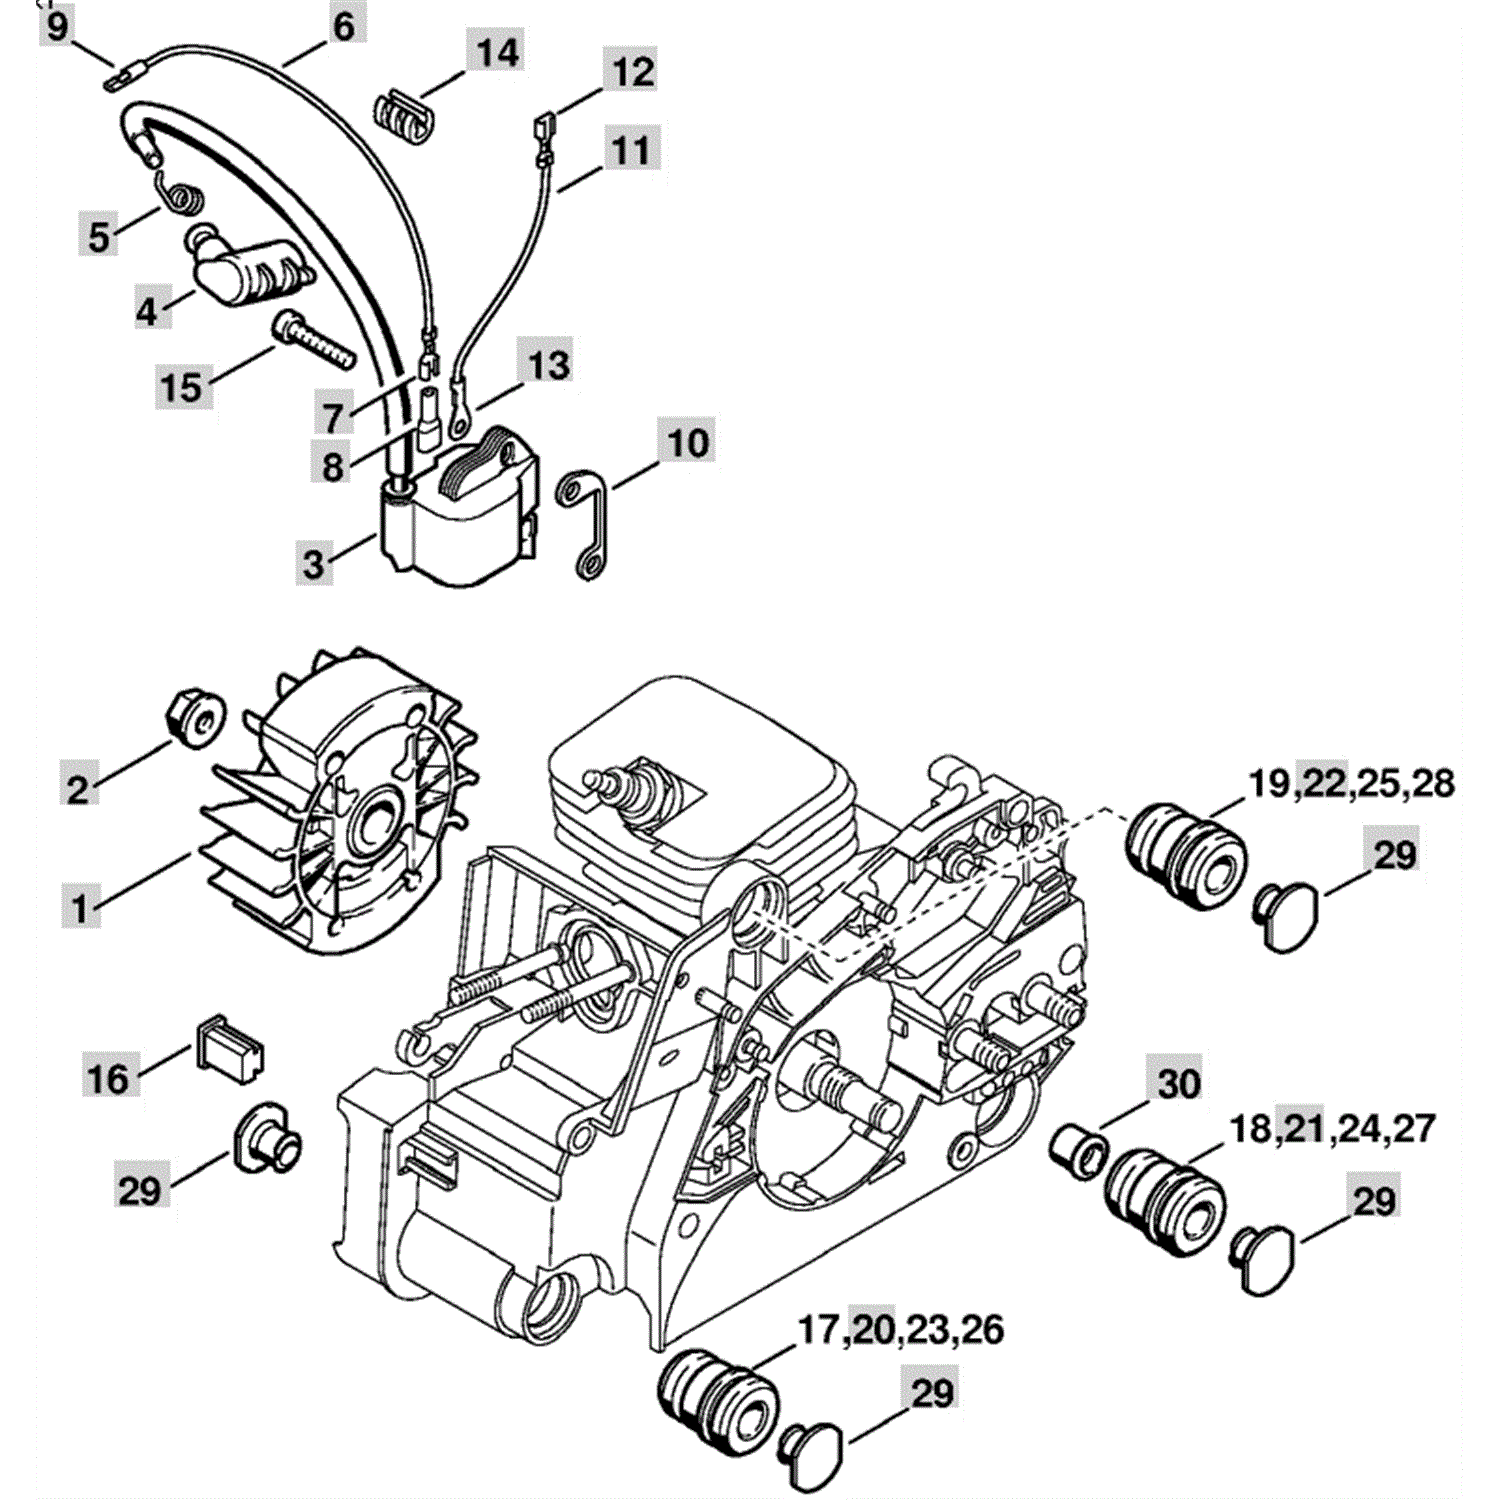 Stihl MS 180 Chainsaw (MS180CBZ) Parts Diagram, Ignition System AV System